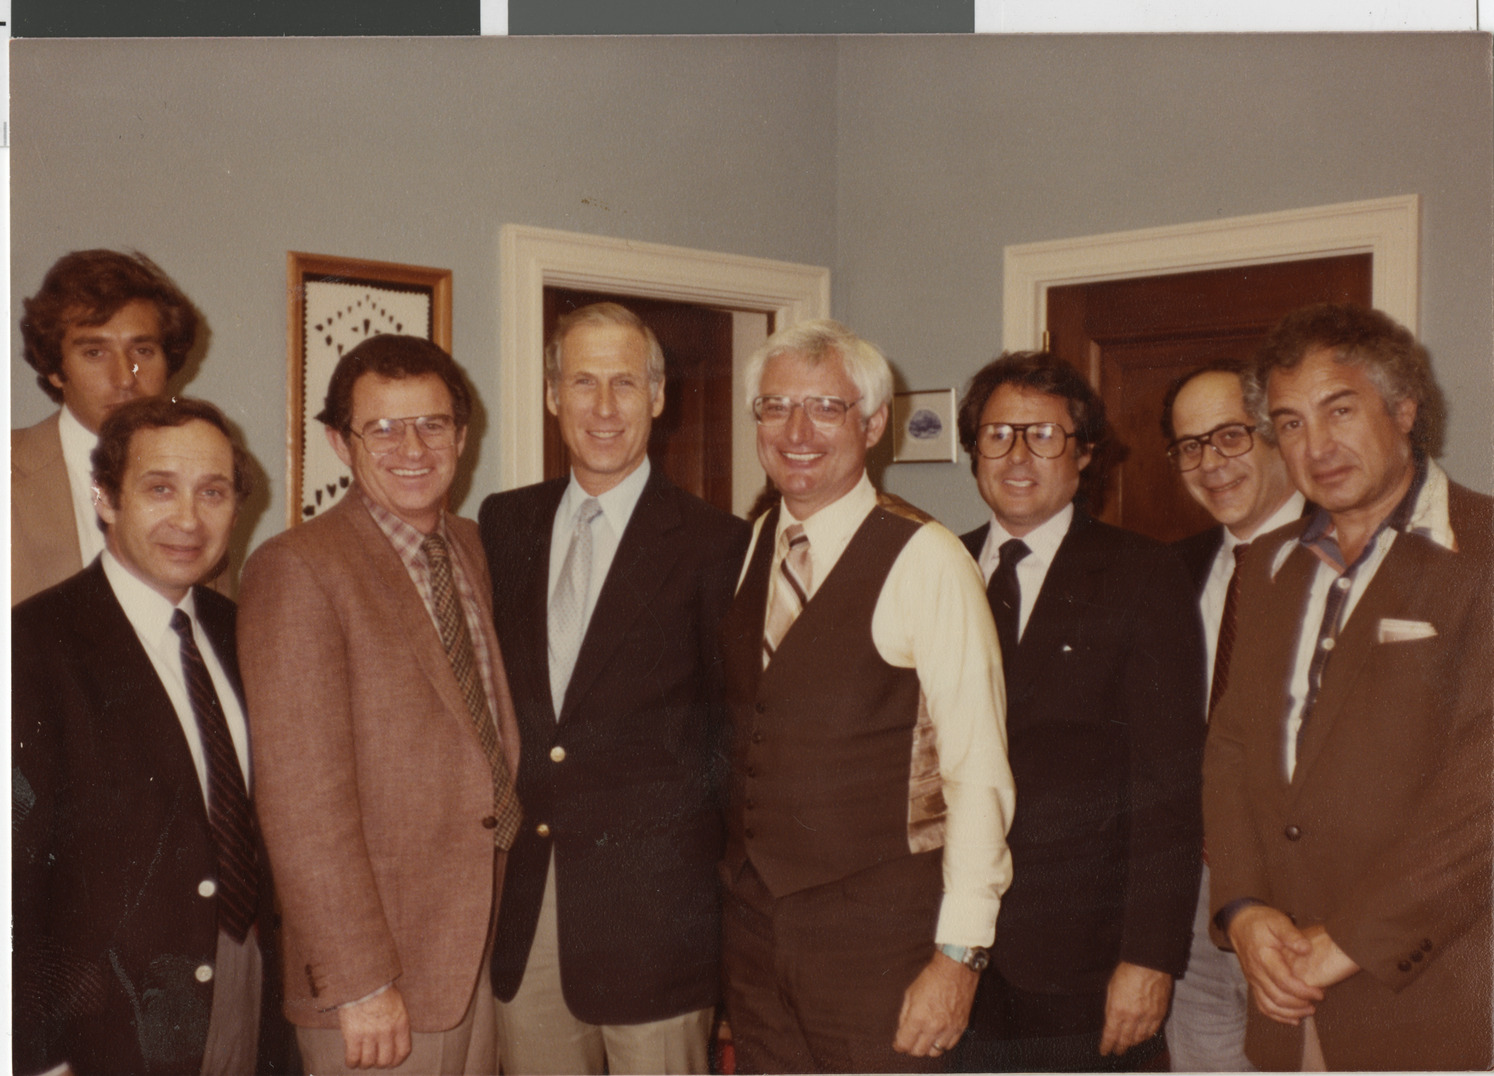 Photograph of Mark Fine, Art Marshall, Phil Shapiro, Herb Rousseau, Jim Santini, (unknown), Dennis Sabbath, and Epstein, date unknown